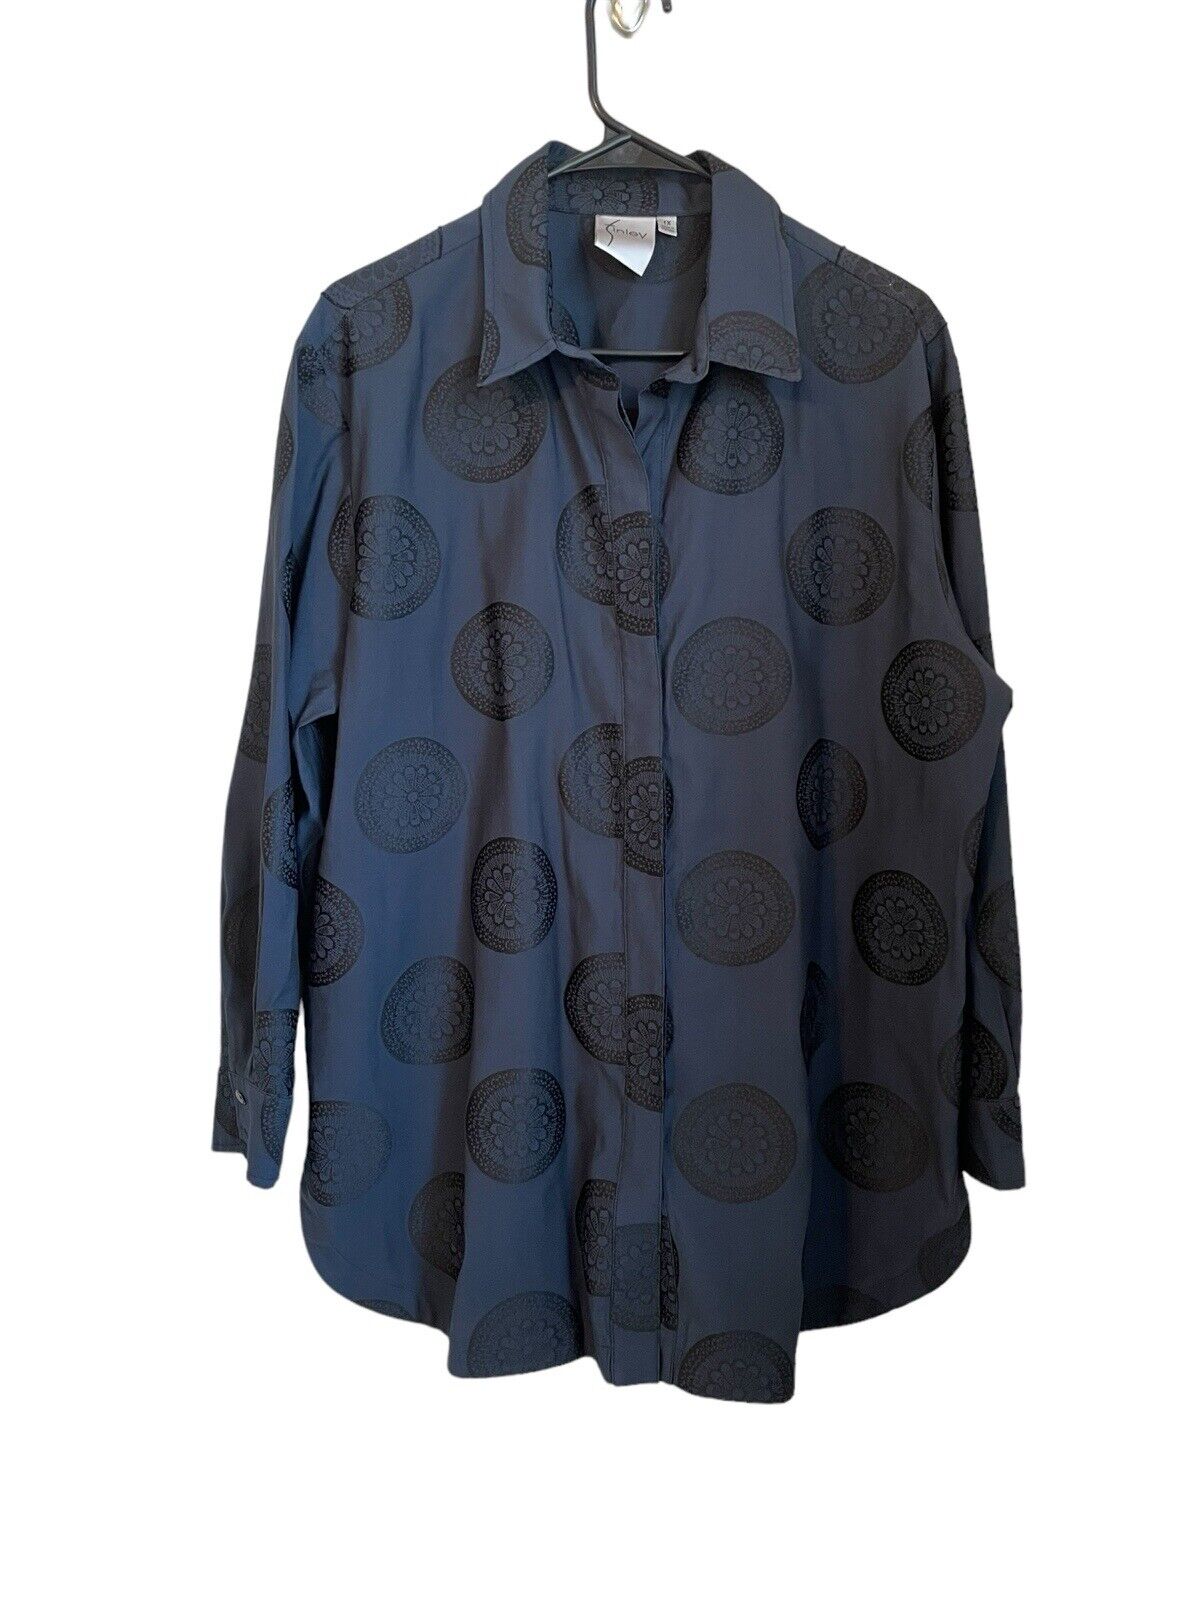 Finley Midnight Blue Black Medallion Print Button Up Shirt Size 1X